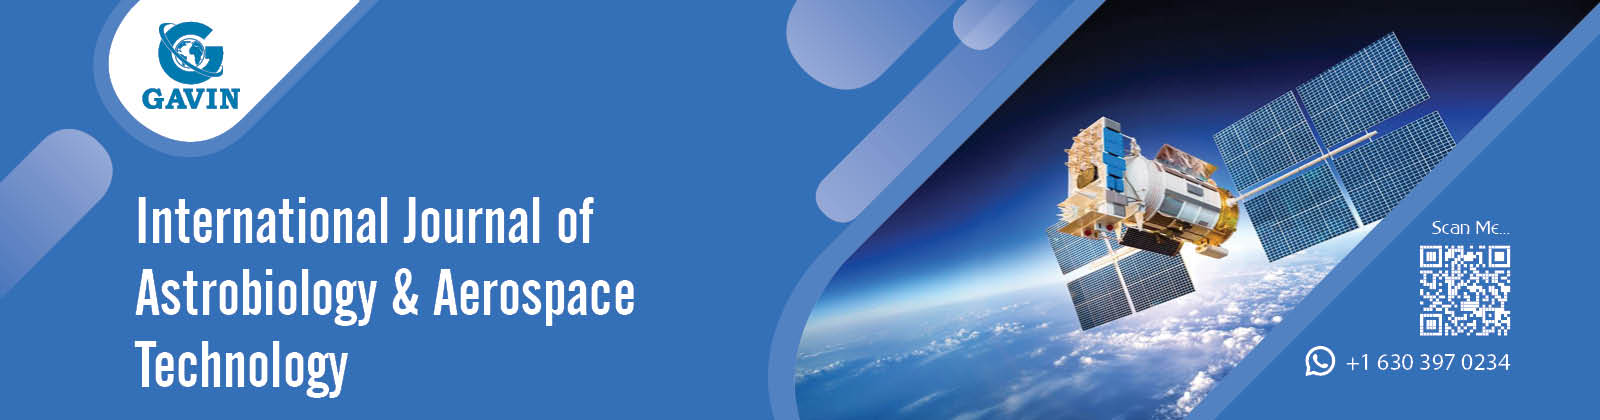 International Journal of Astrobiology & Aerospace Technology